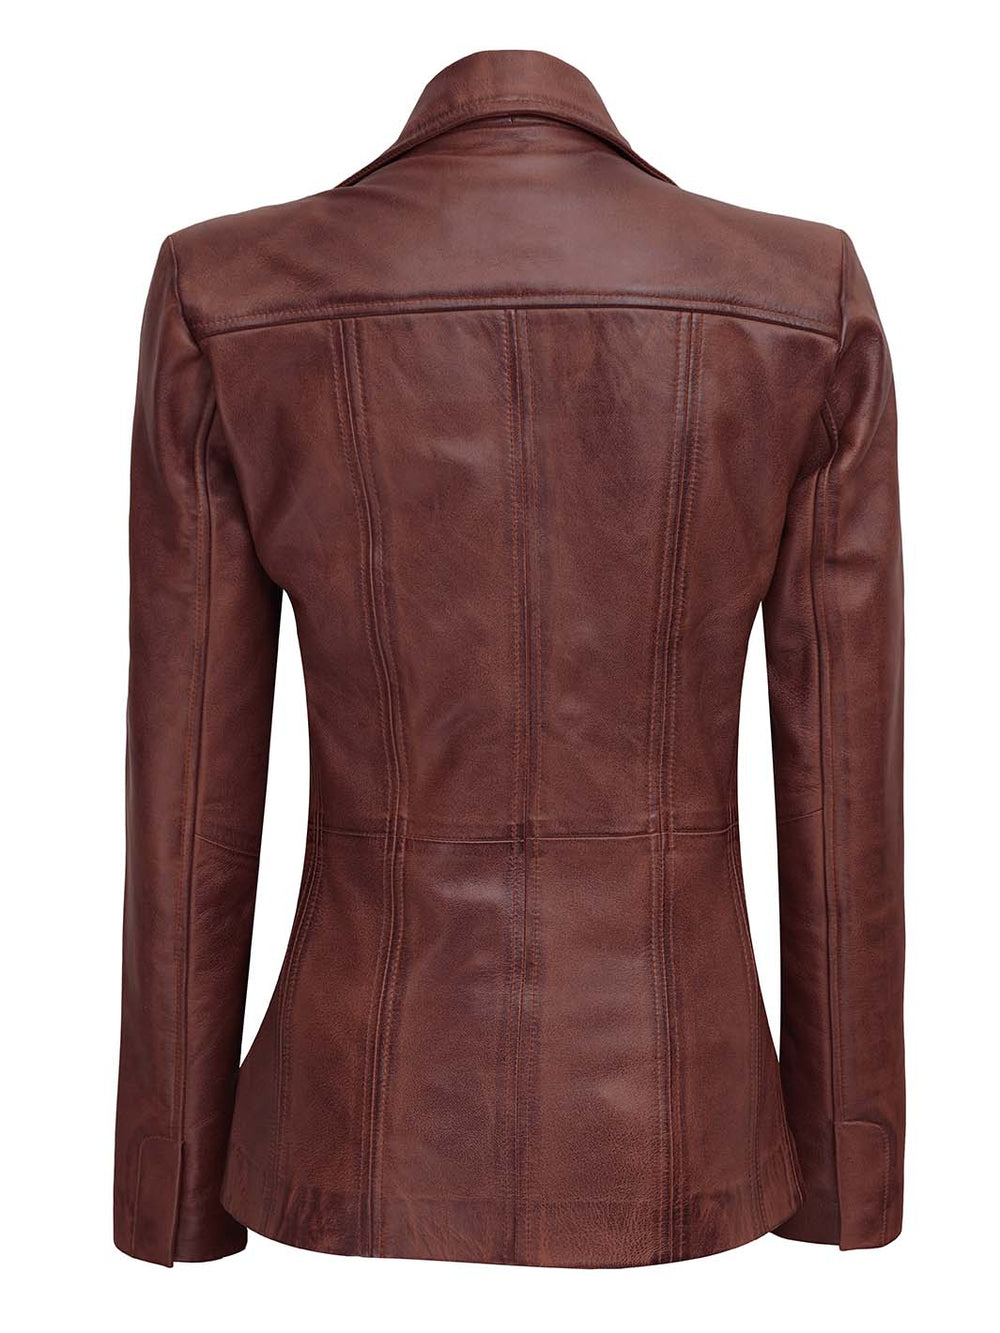 Women brown leather car coat